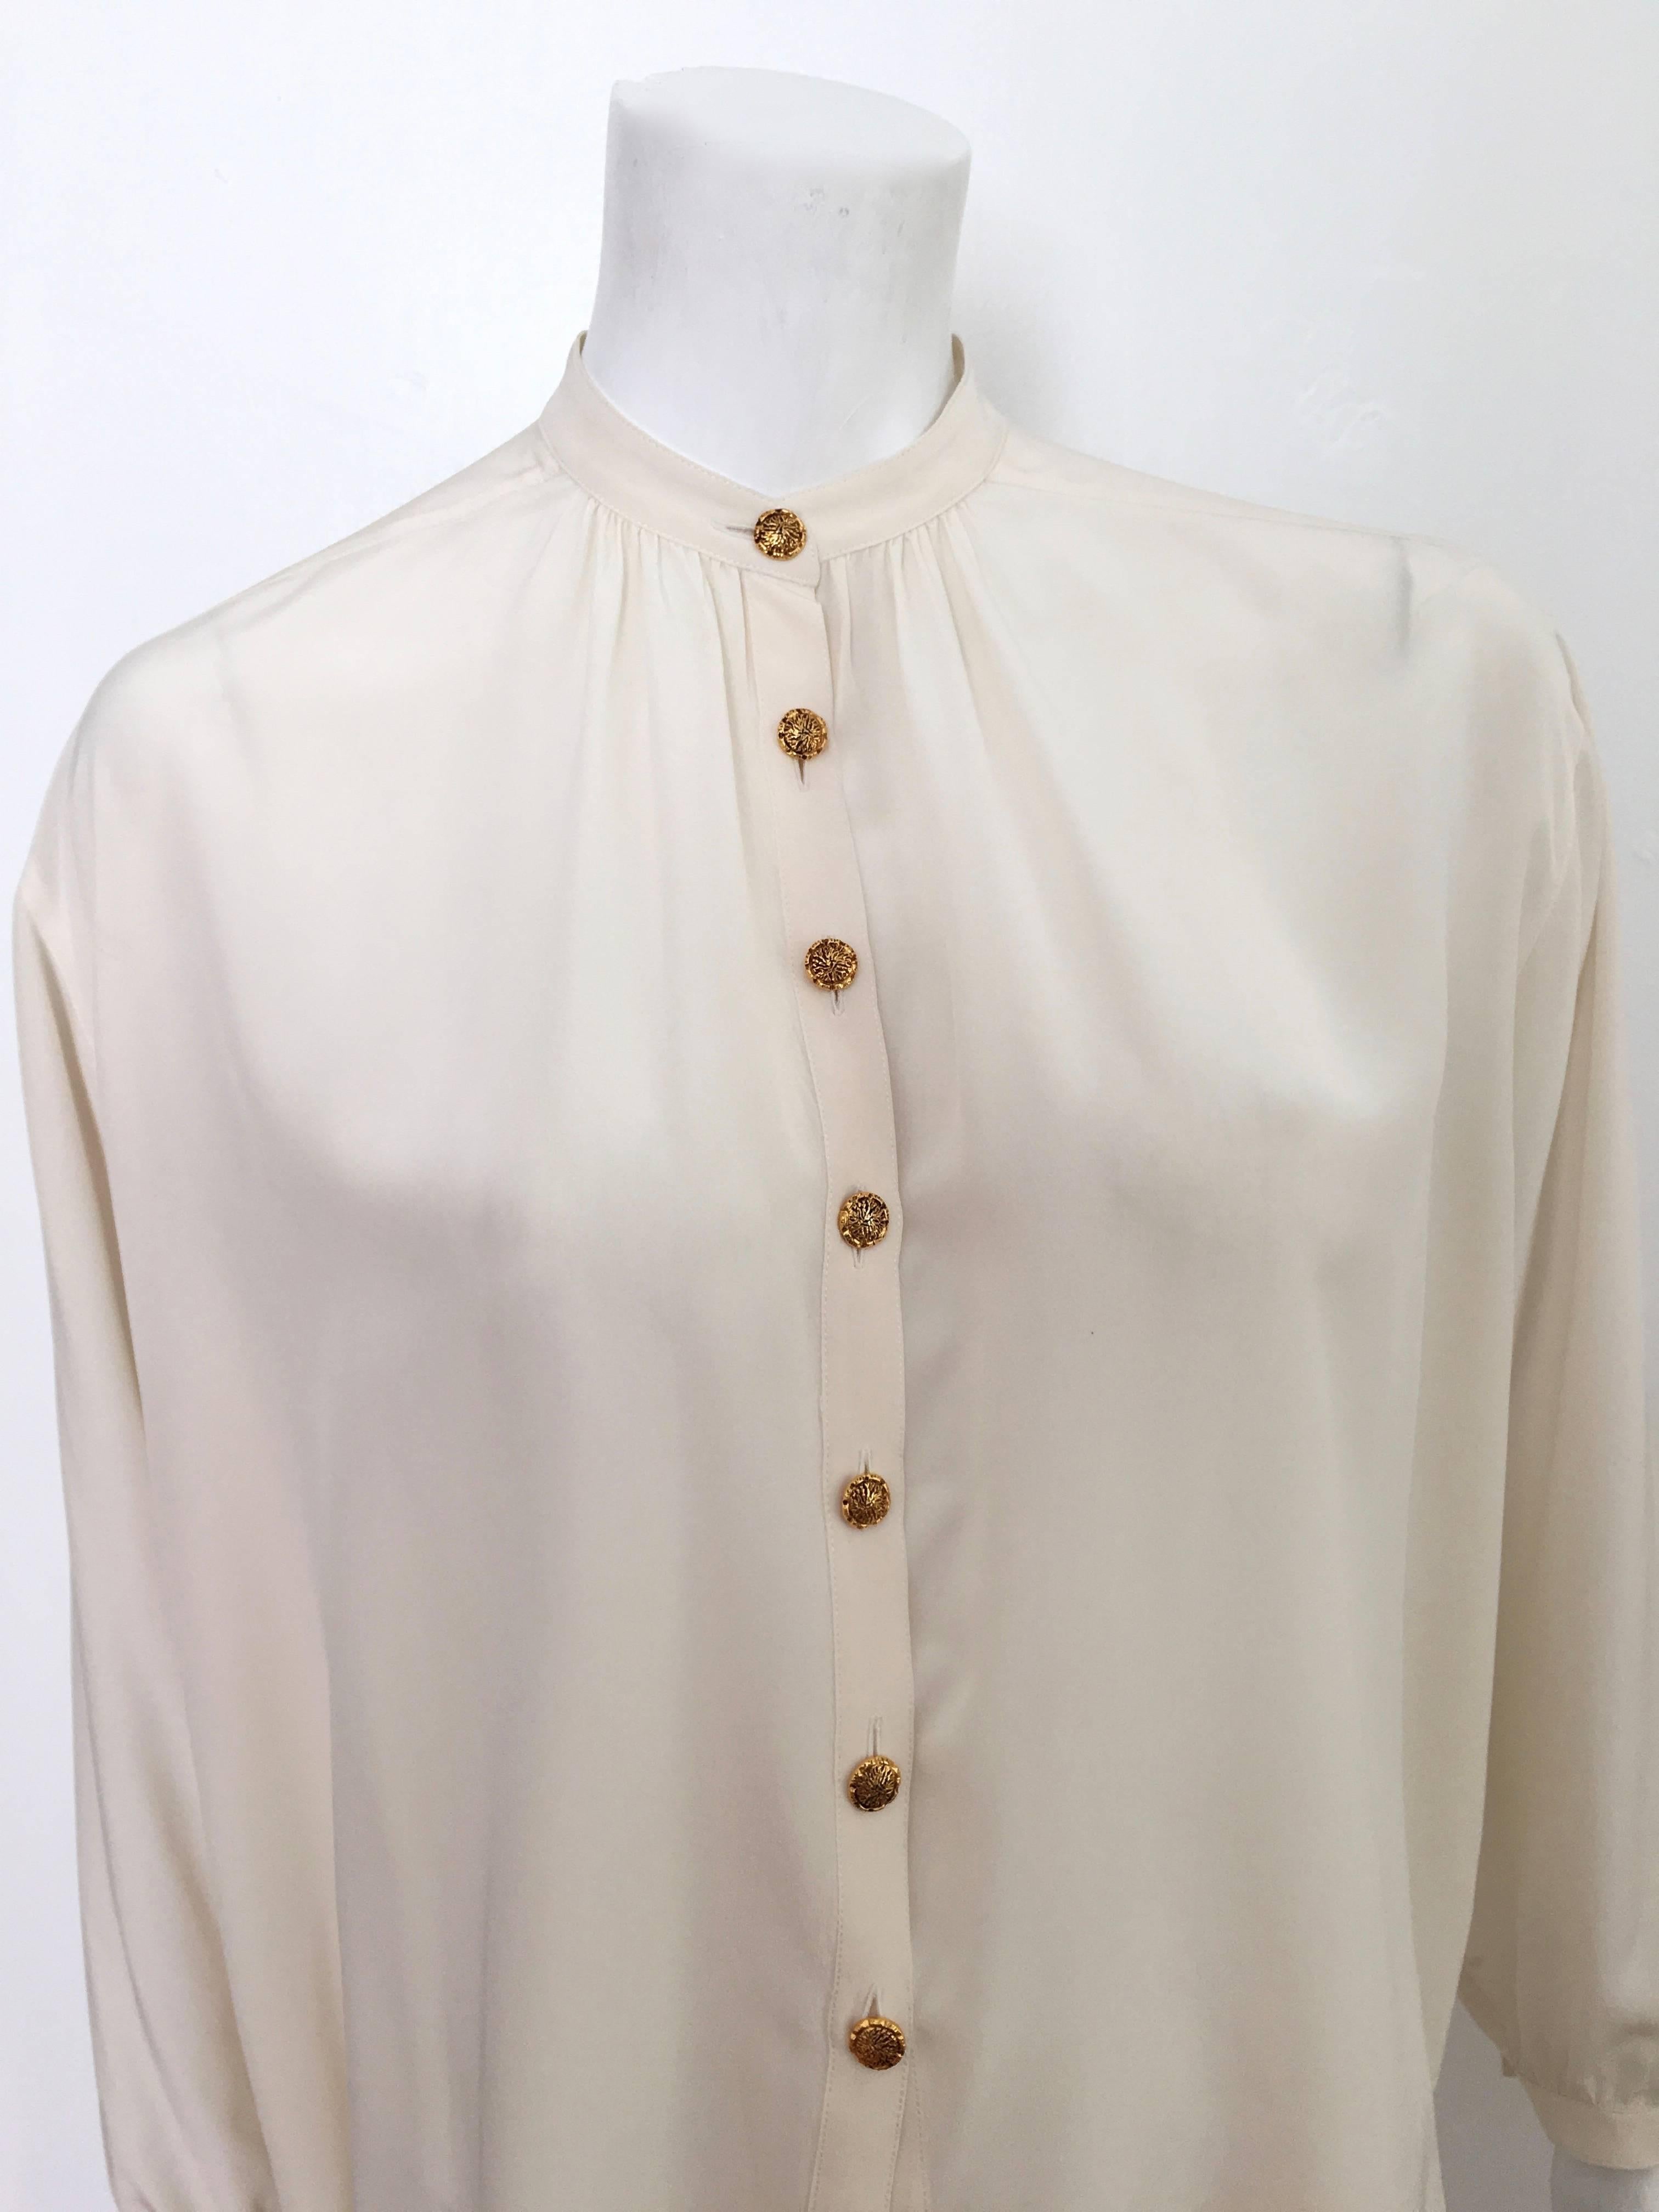 Yves Saint Laurent Silk Blouse Size 6, 1990s  For Sale 1